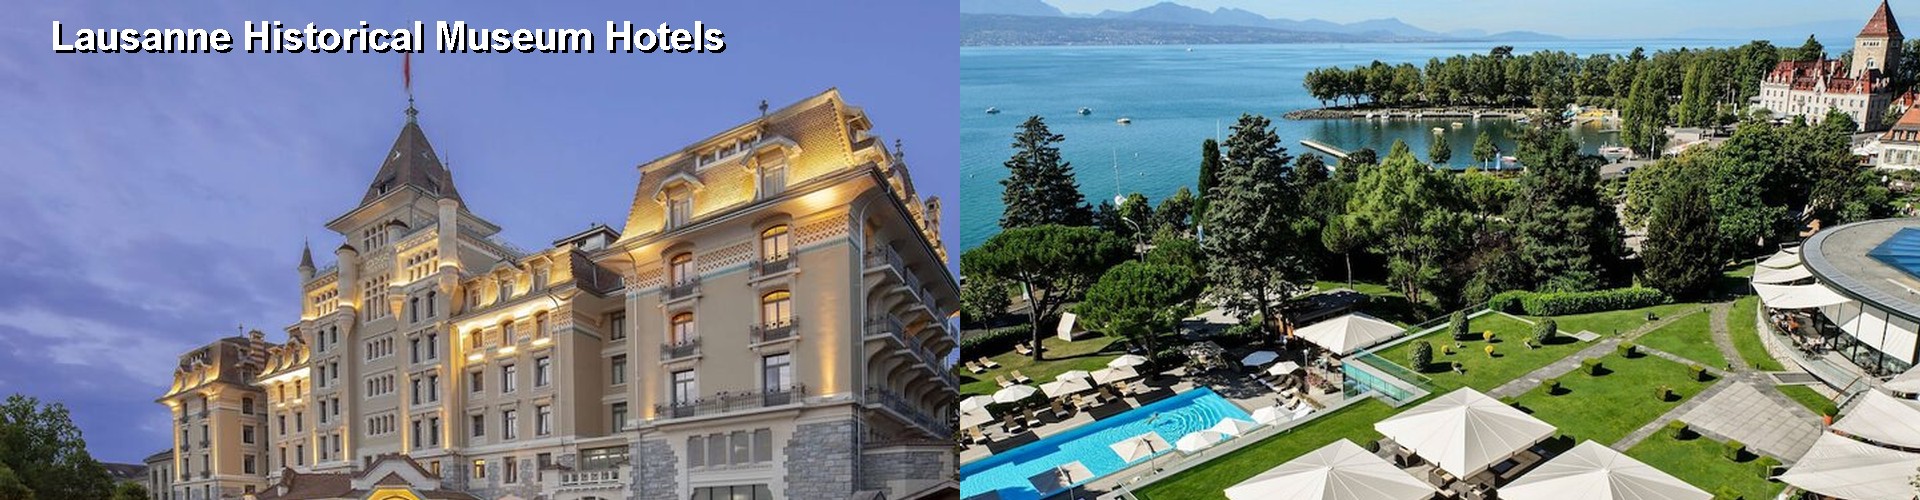 5 Best Hotels near Lausanne Historical Museum